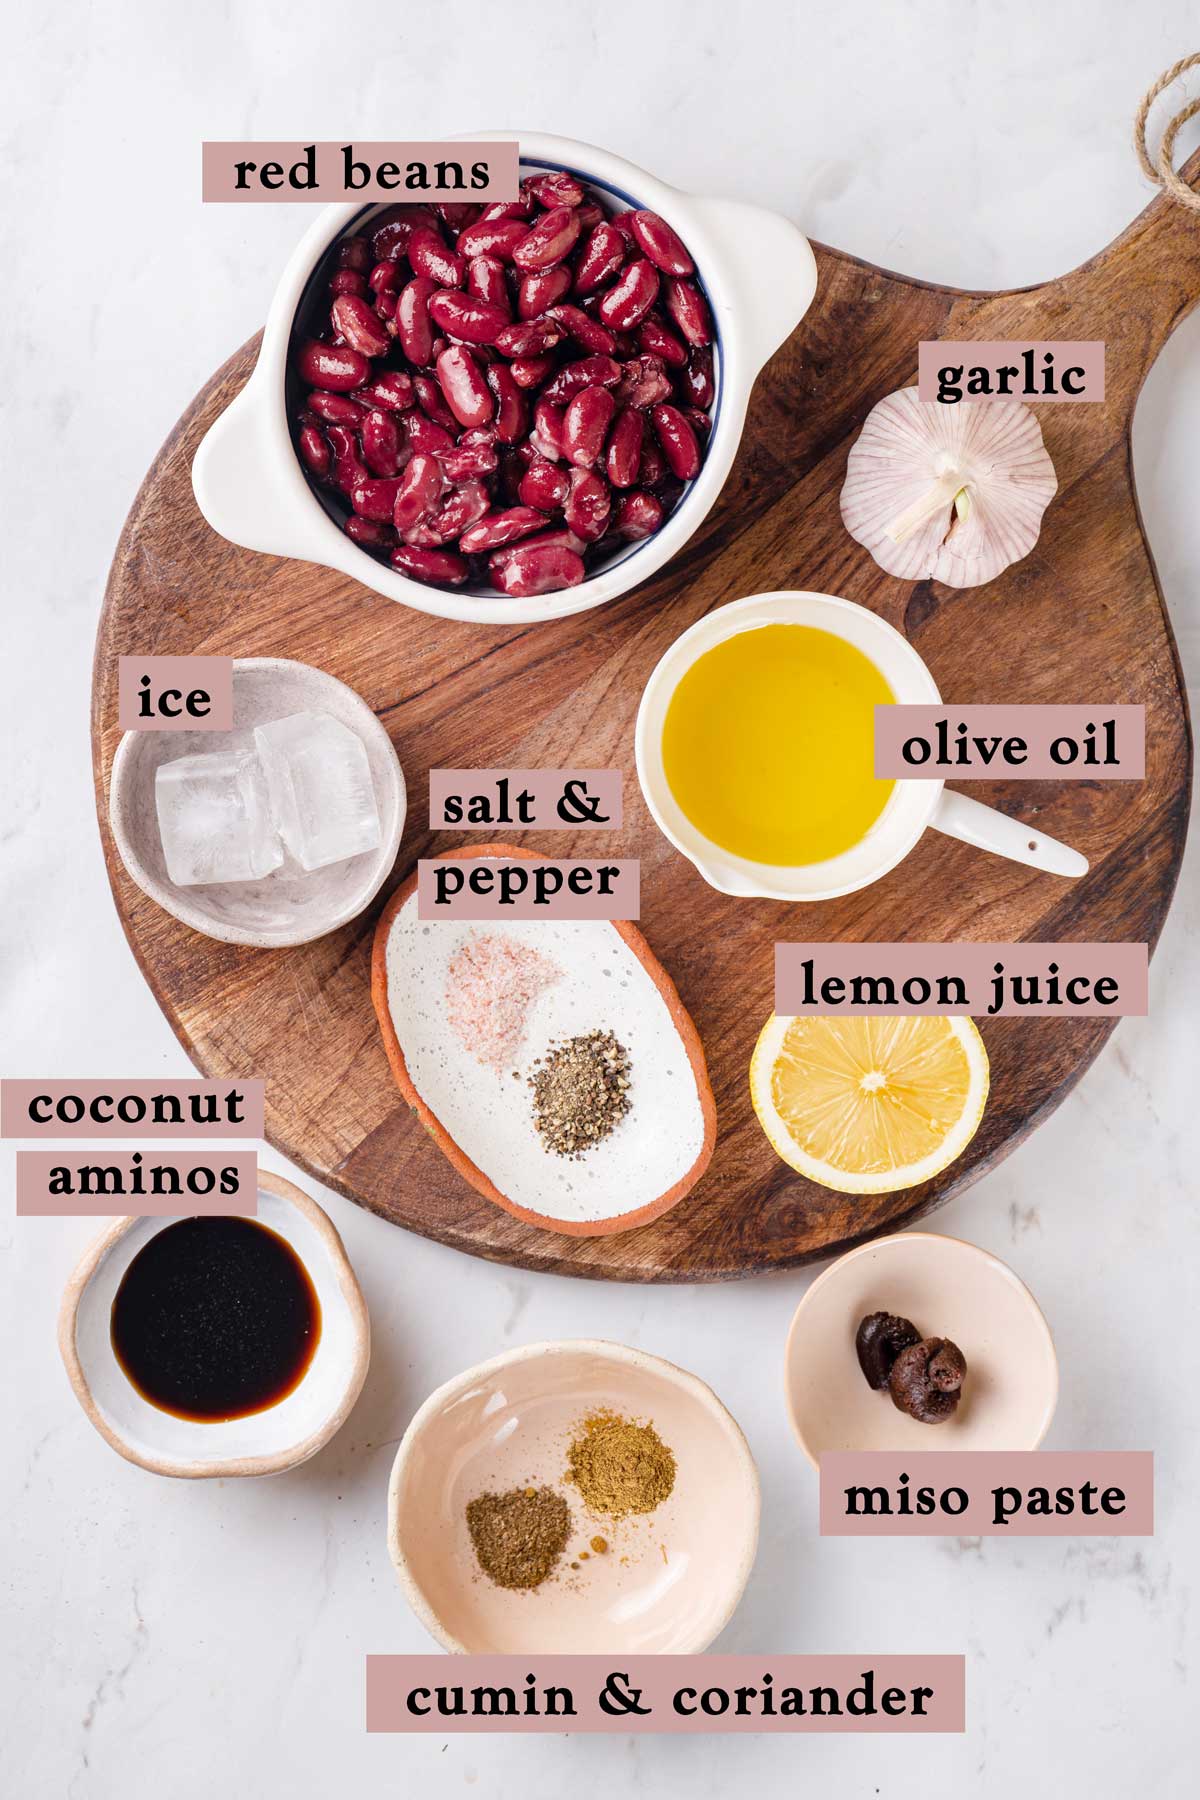 Ingredients for red bean hummus